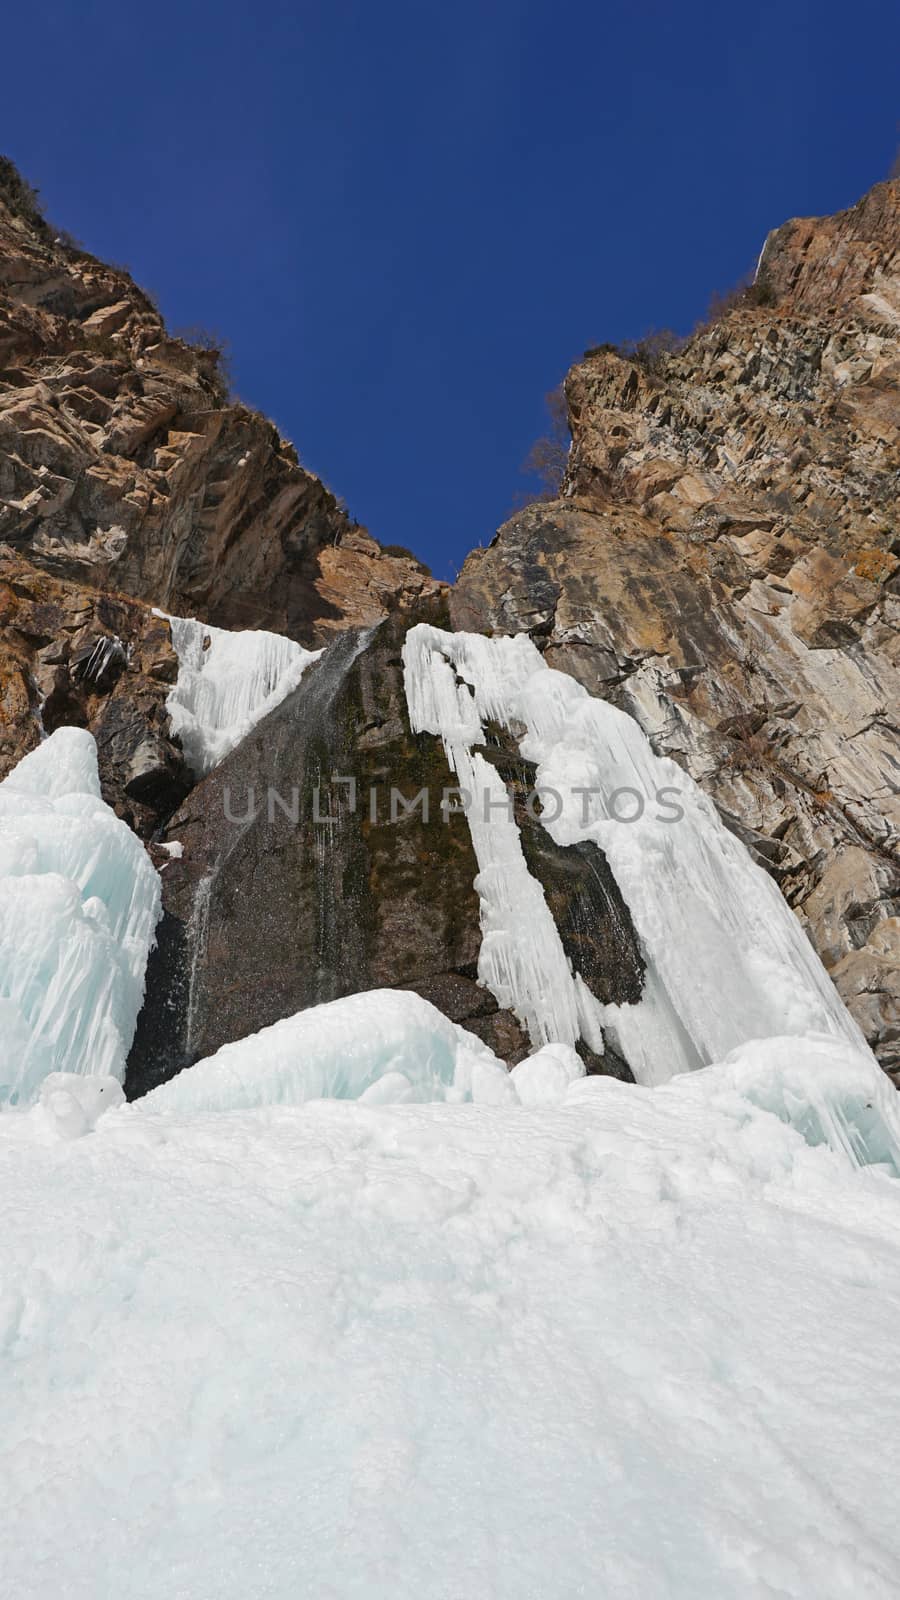 Frozen waterfall among the rocks. by Passcal